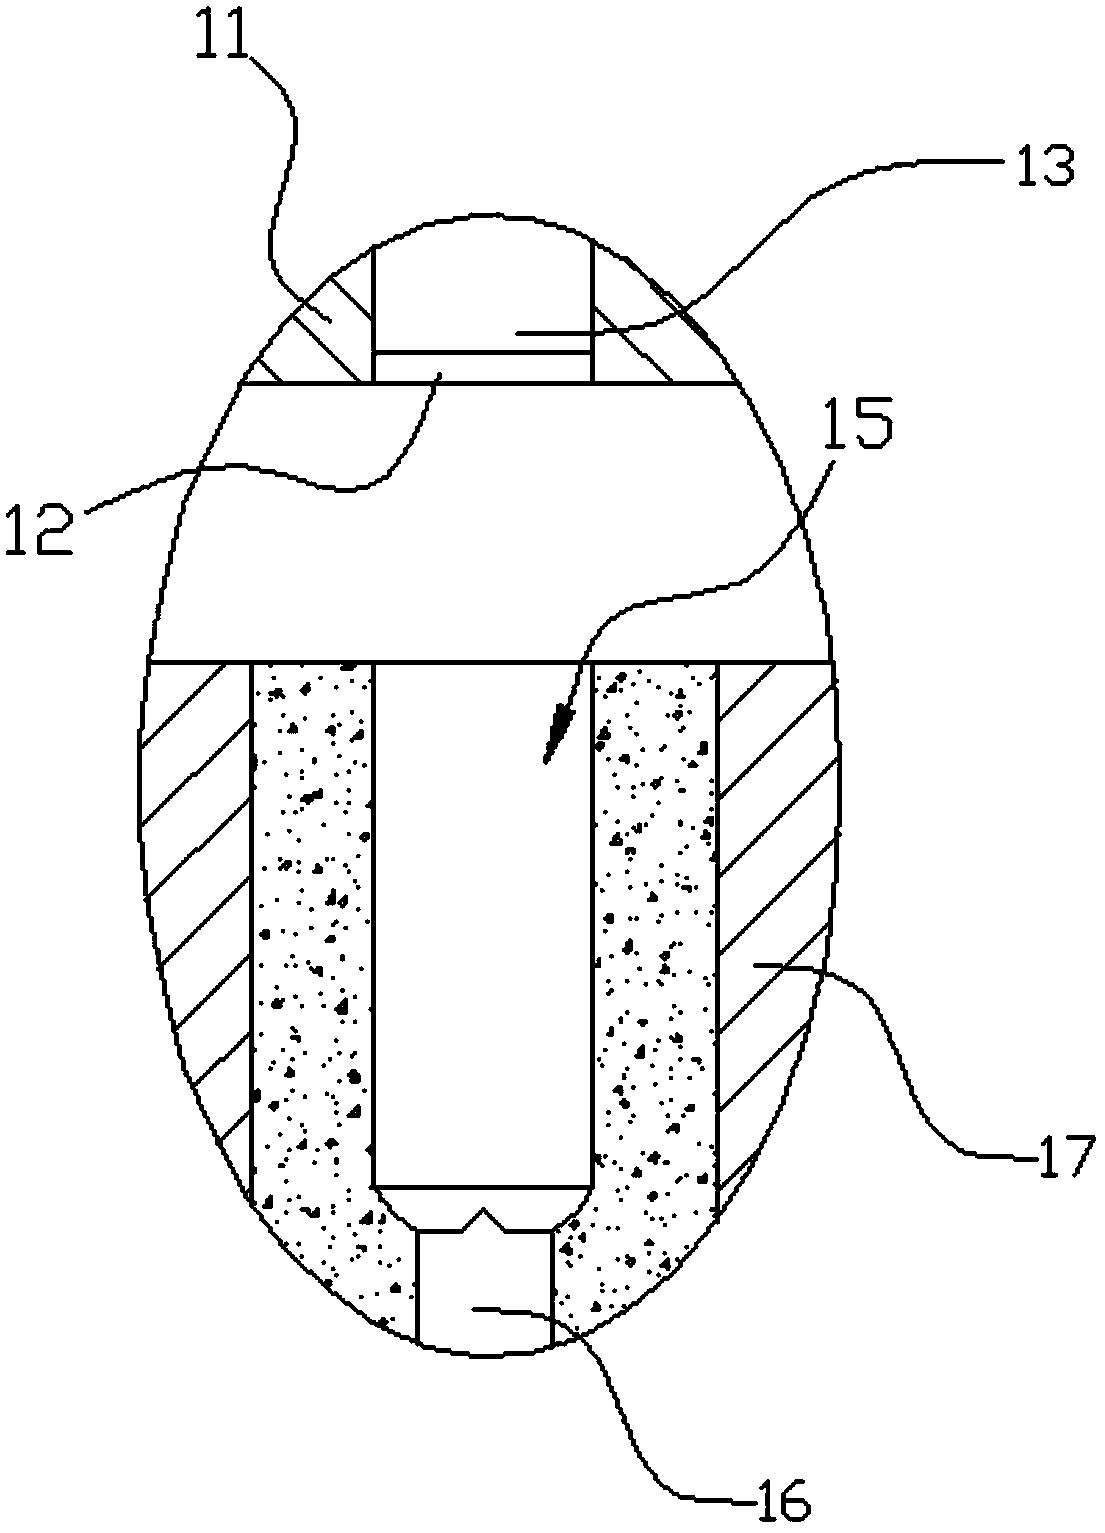 A semi-hollow pin plastic forming method